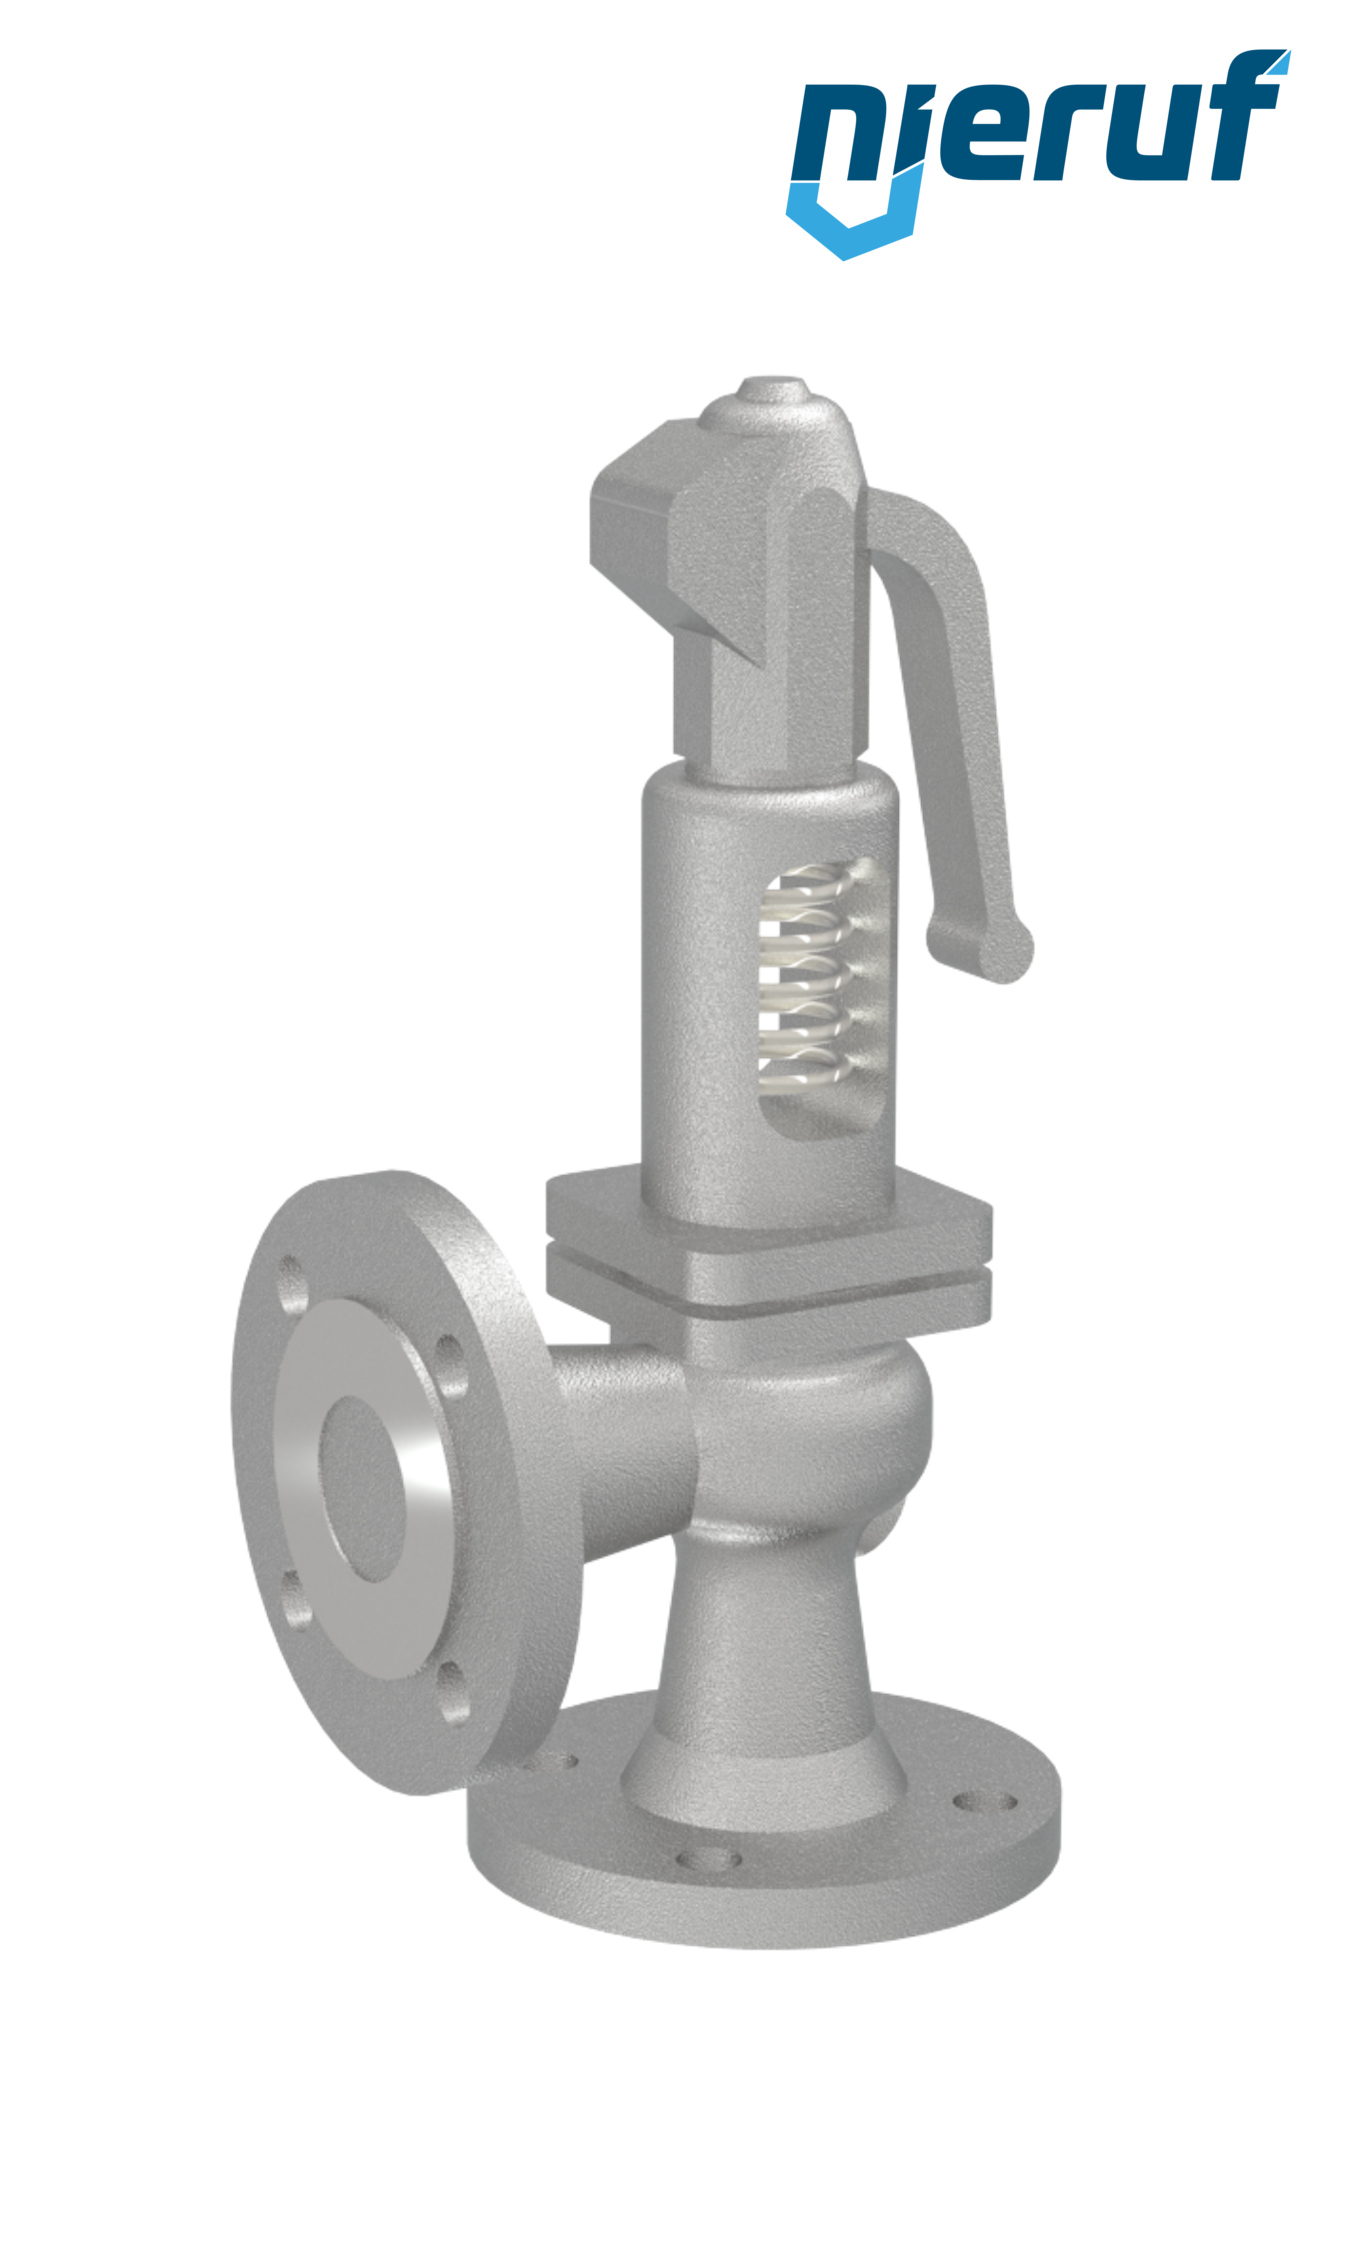 flange-safety valve DN40/DN40 SF0102, cast iron EN-JL1040 EPDM, with lever